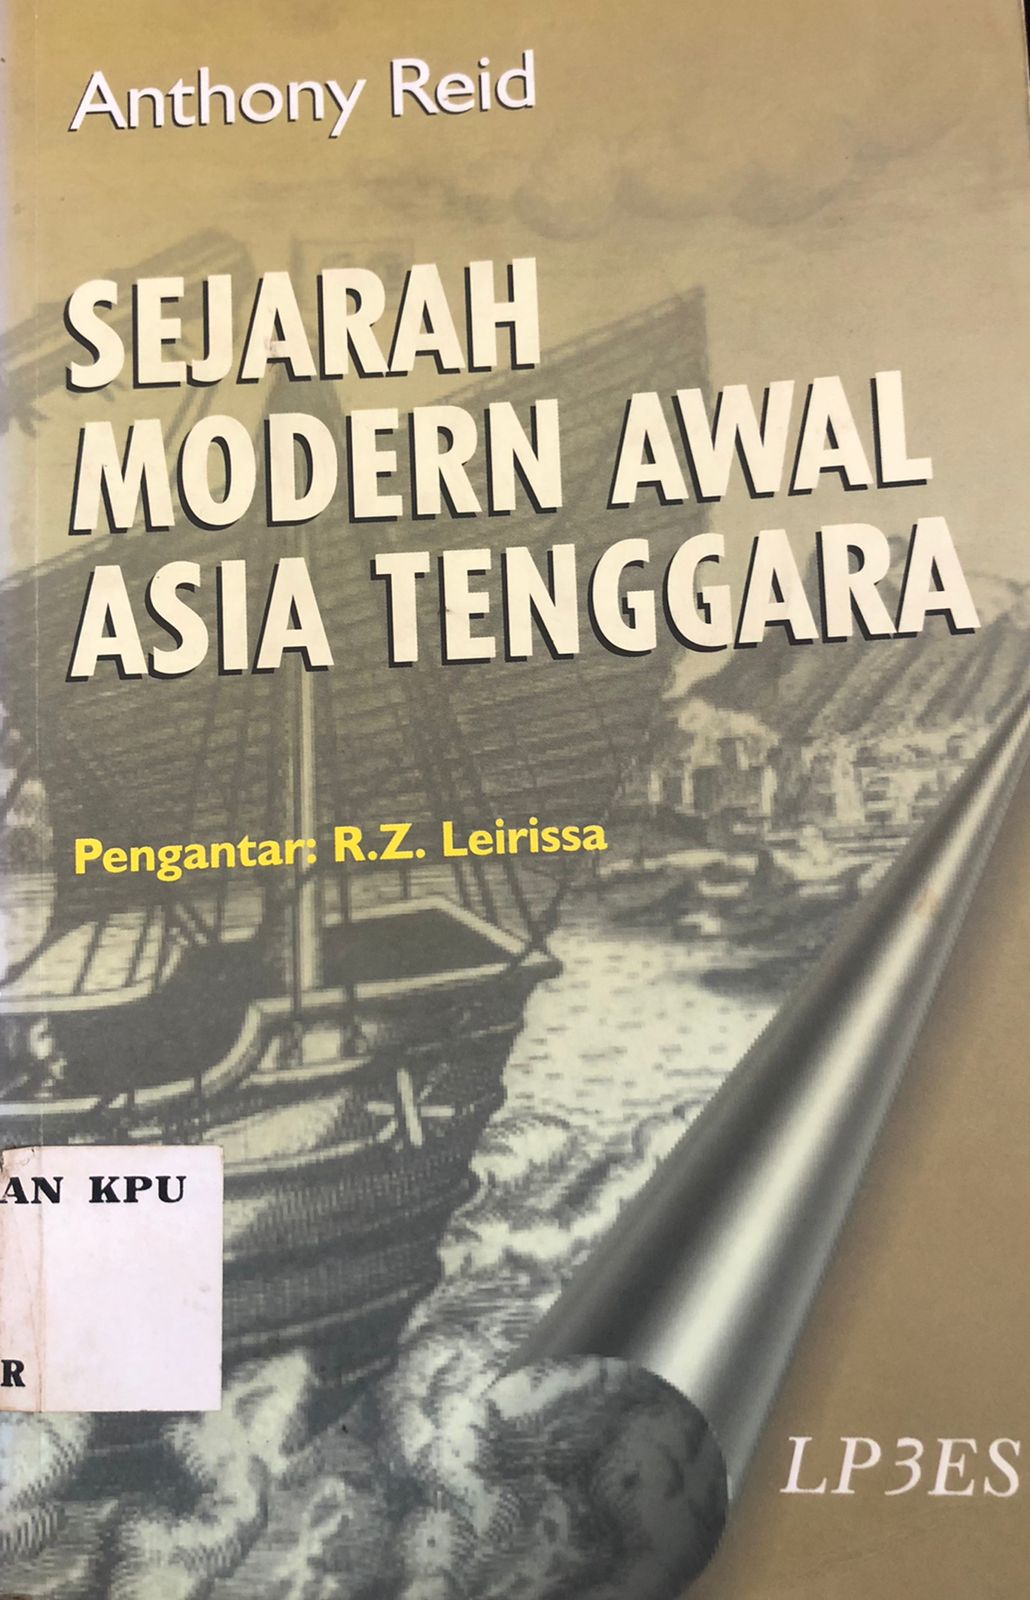 Sejarah Modern Awal Asia Tenggara